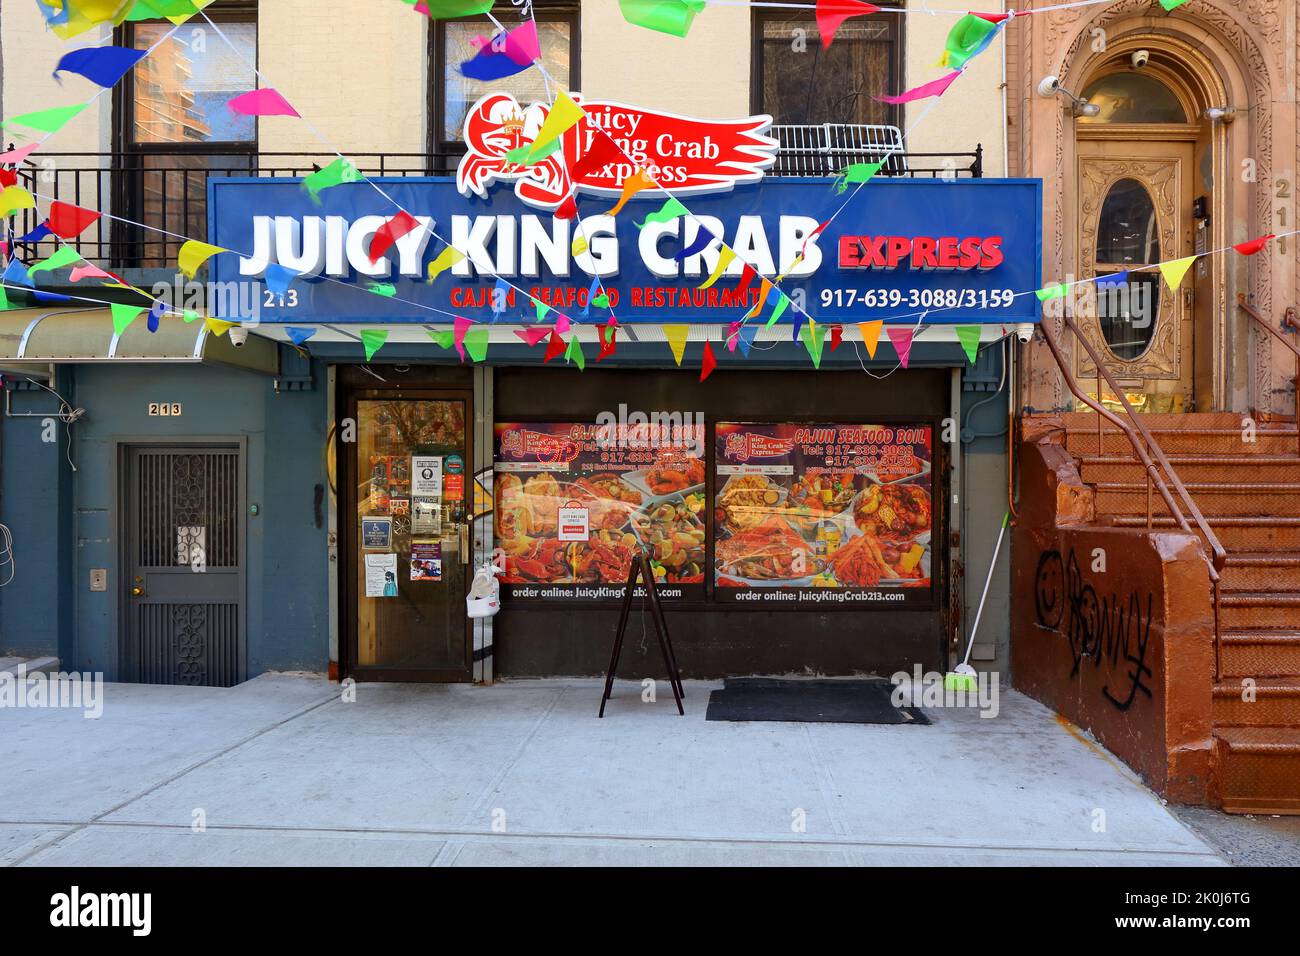 [Storefront storico] Juicy King Crab Express, 213 e Broadway, New York. Storefront di un ristorante di pesce cajun boil nel Lower East Side. Foto Stock